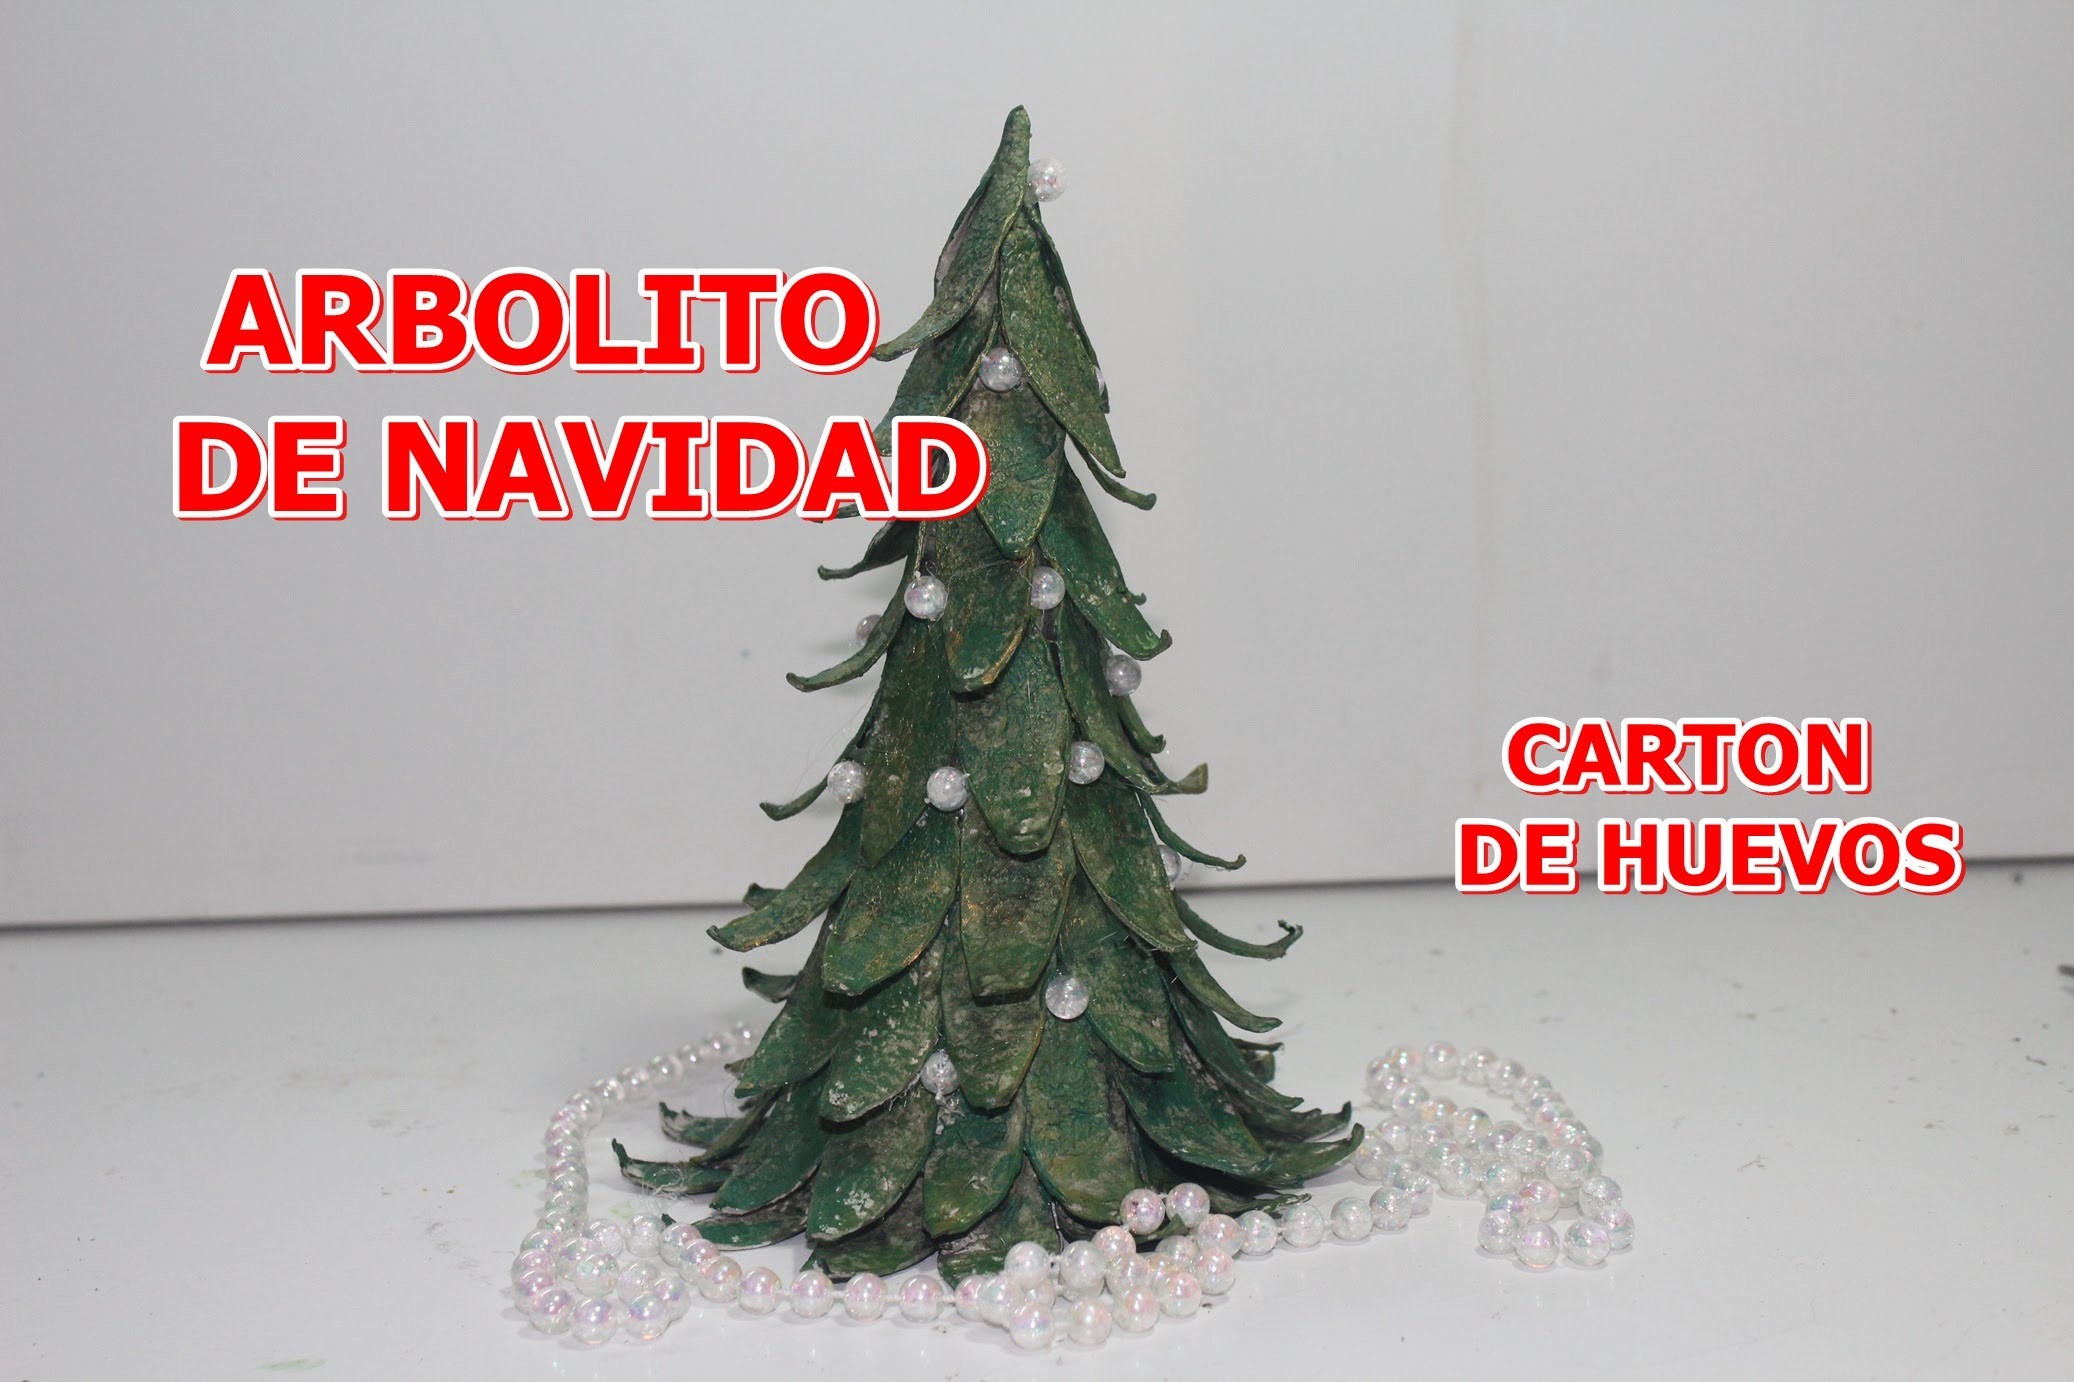 ARBOL DE NAVIDAD CON CARTON DE HUEVOS - Christmas tree with egg carton